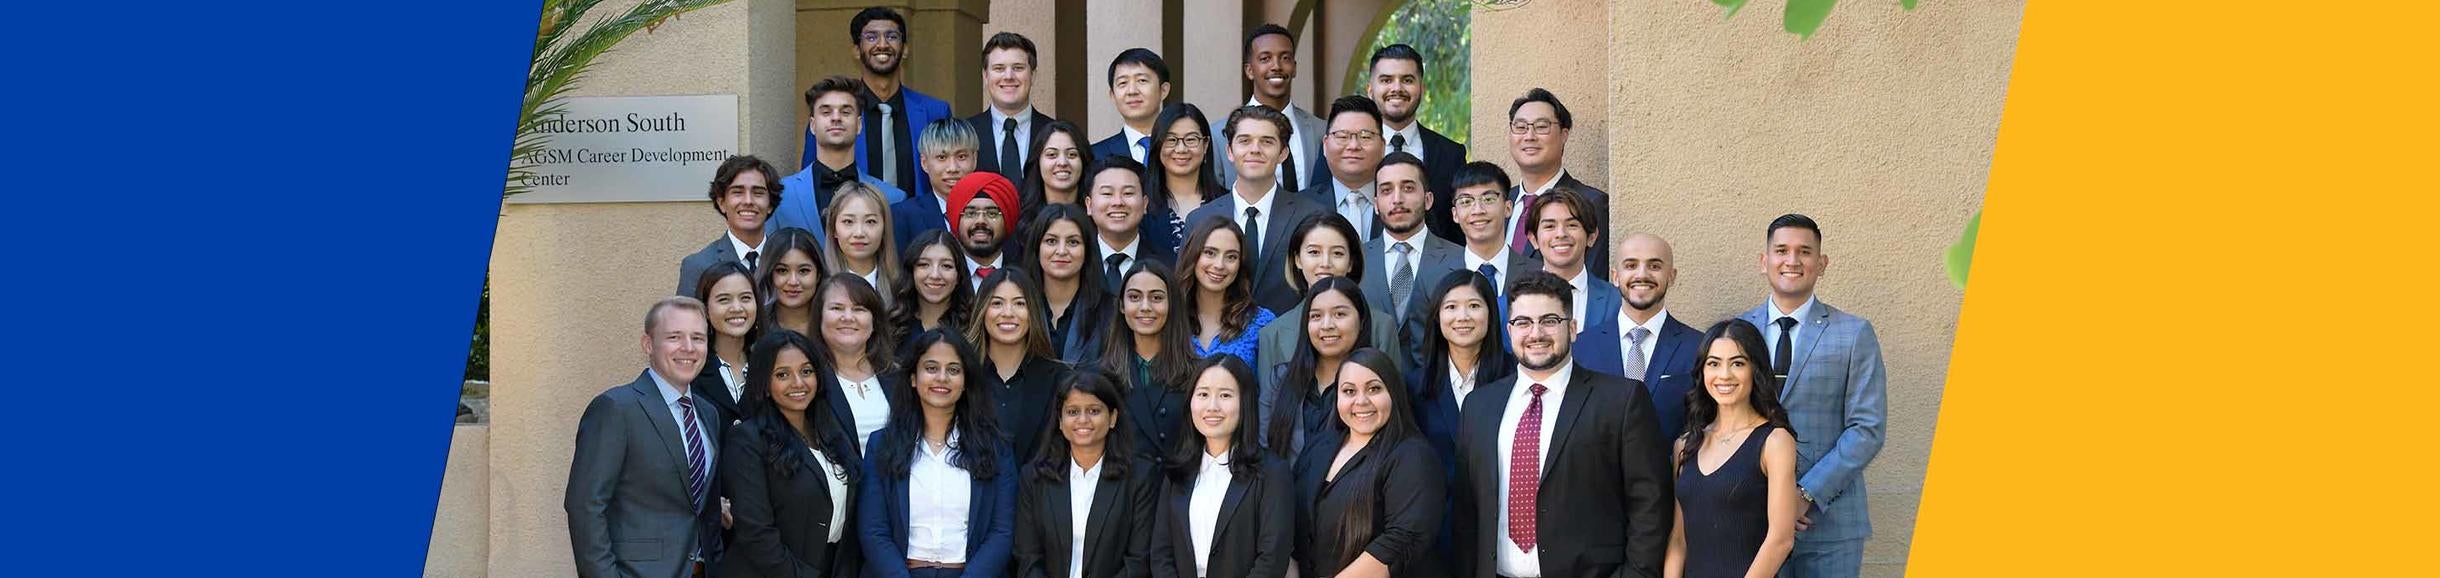 UCR School of Business graduate student ambassadors 2021/2022